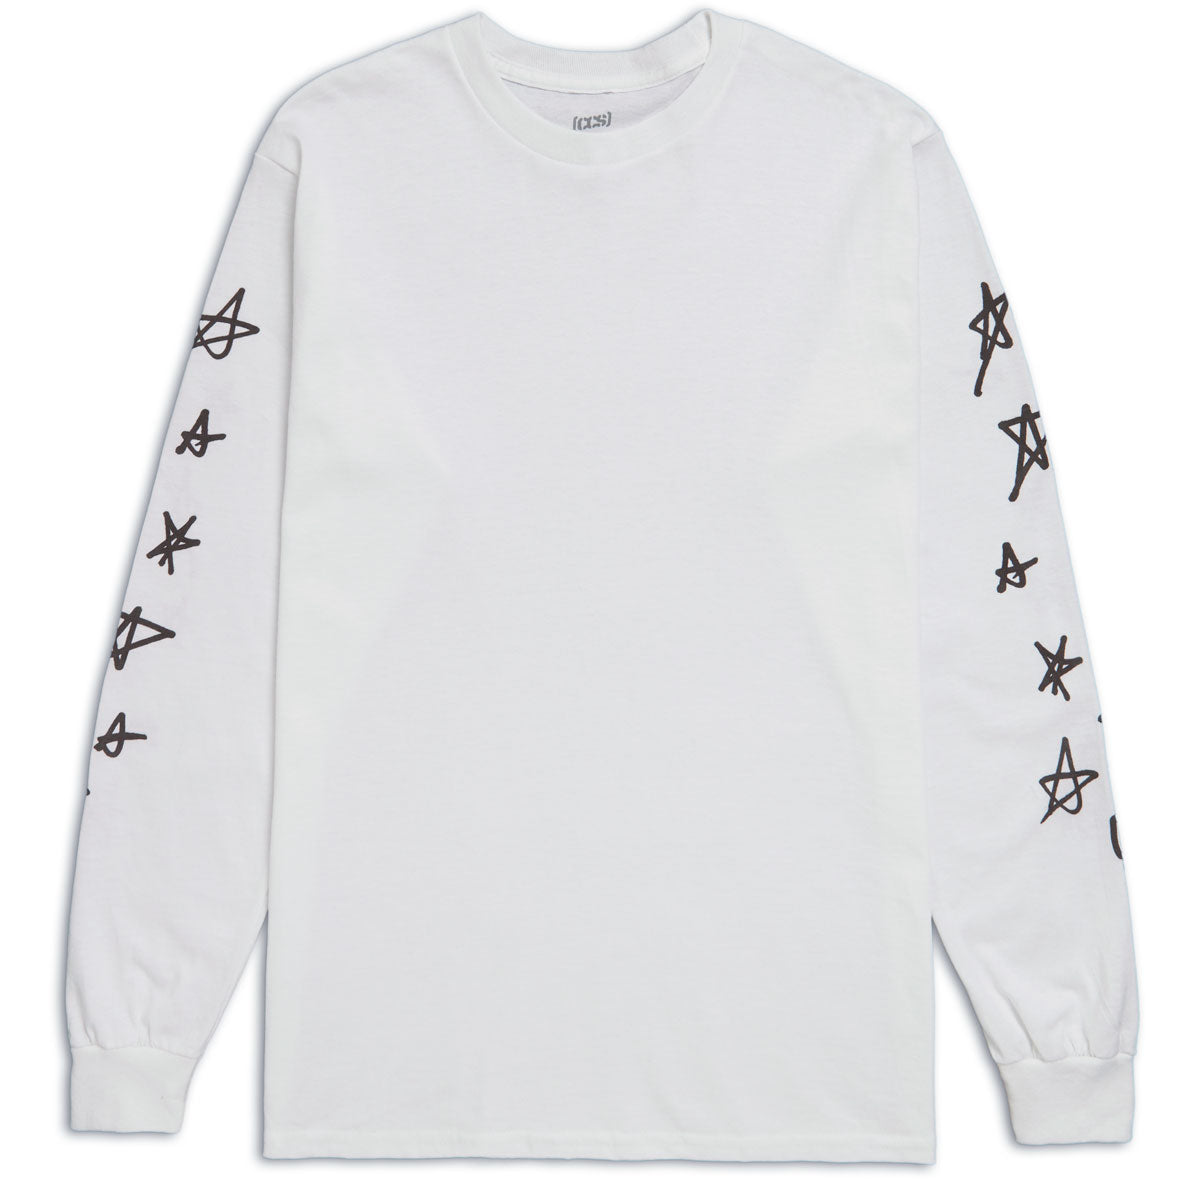 CCS Stars Long Sleeve T-Shirt - White/Black - XL image 1